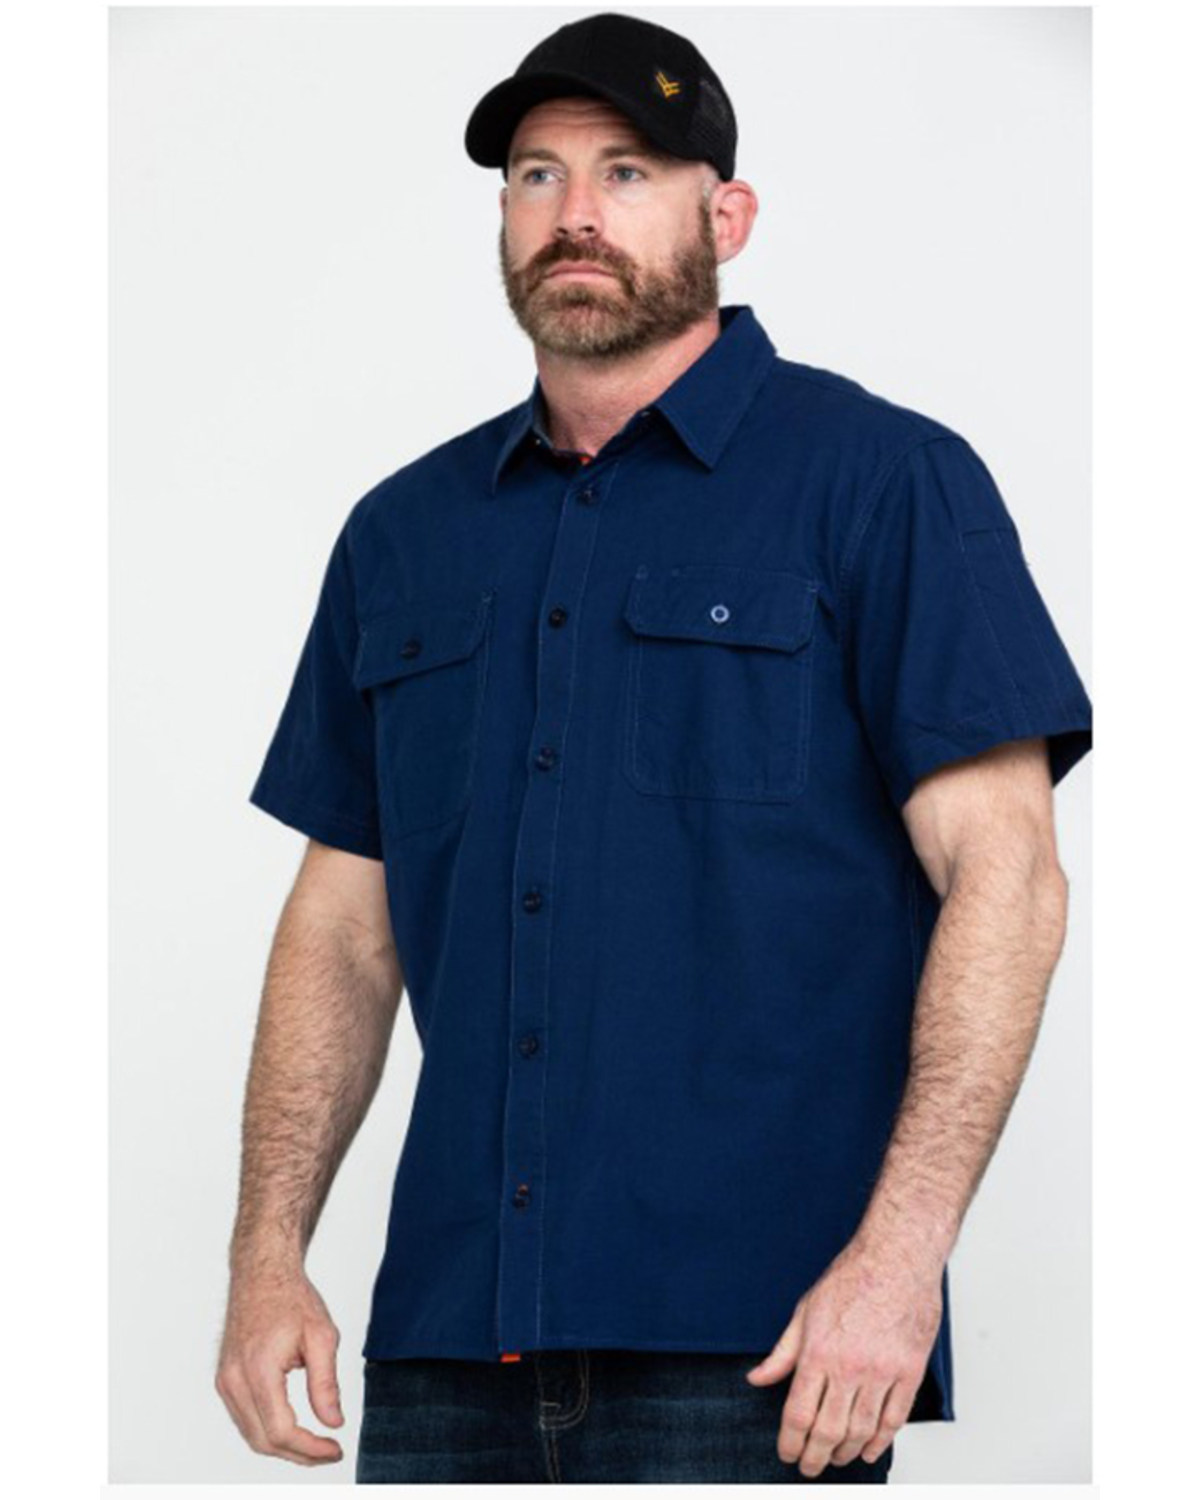 Hawx Men's Solid Navy Yarn Dye Two Pocket Short Sleeve Work Shirt - Big